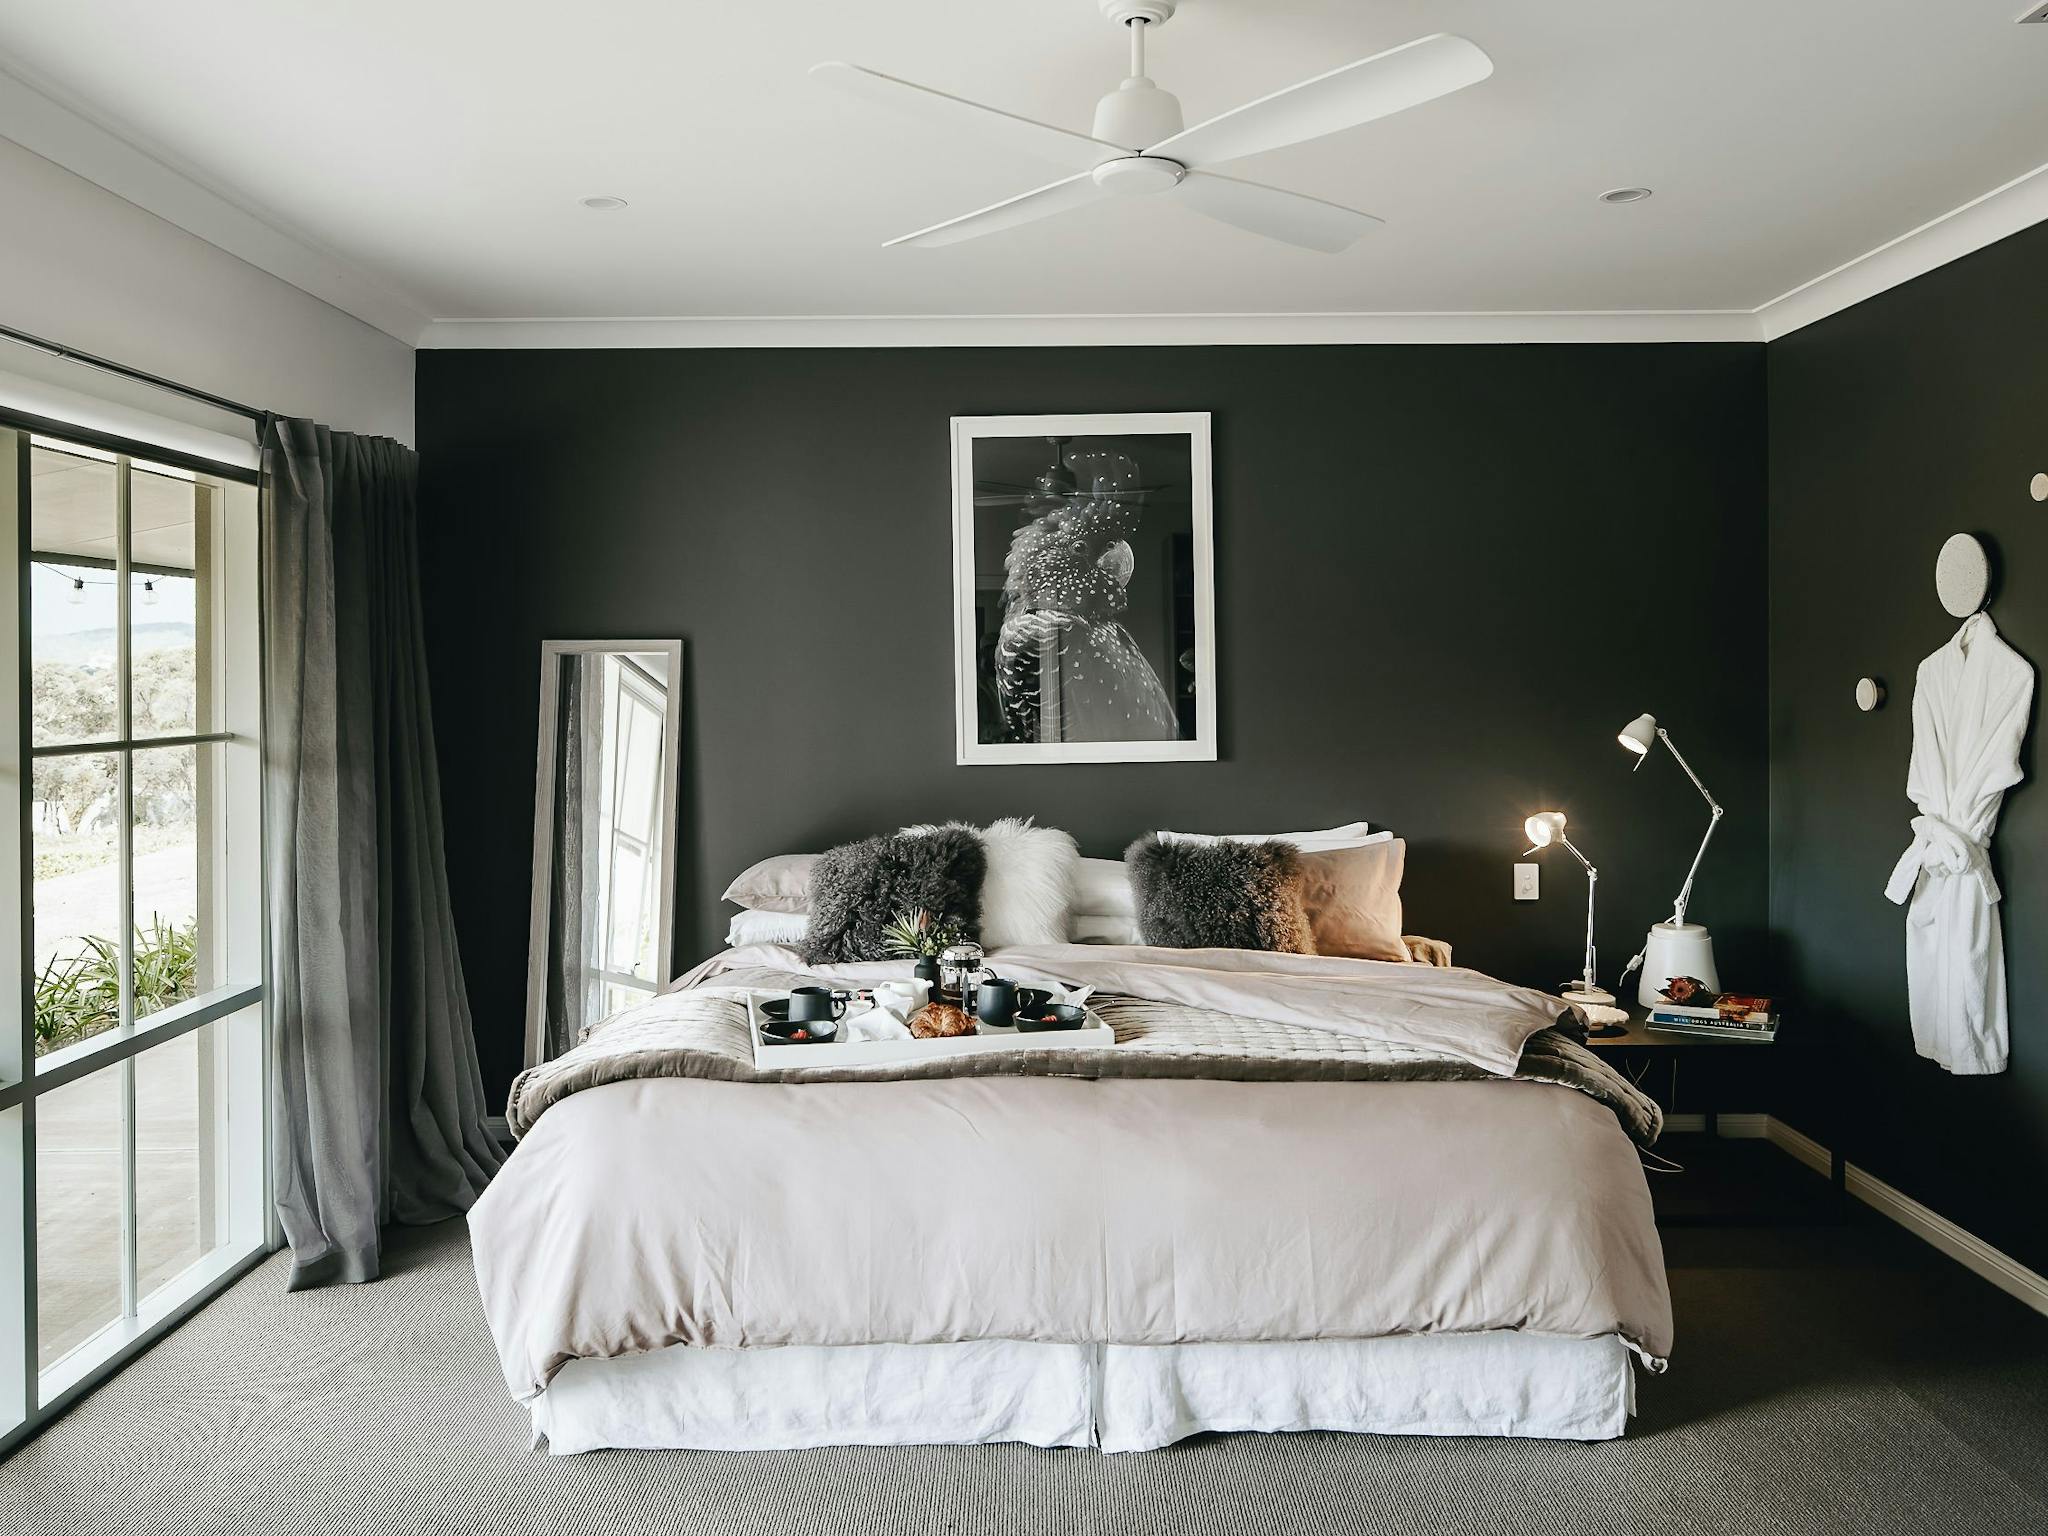 Luxurious moody bedroom with breakfast platter